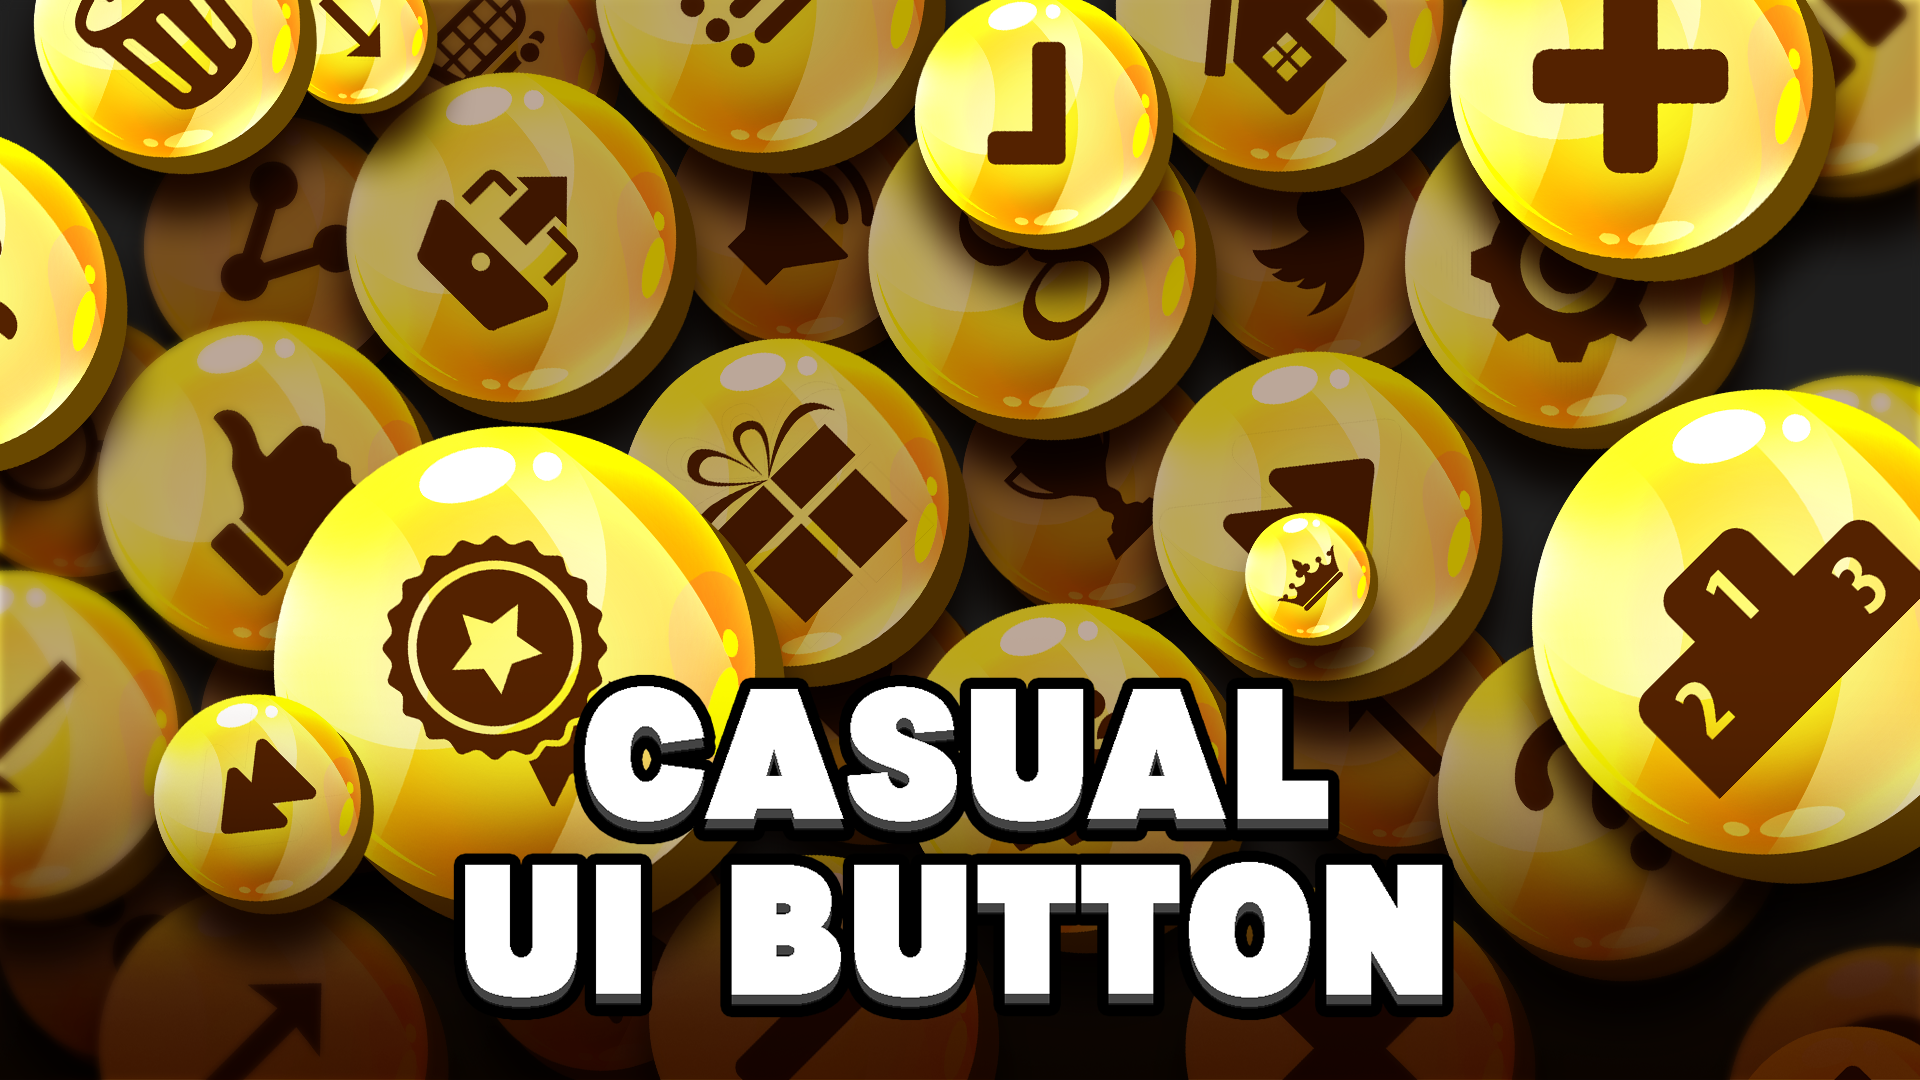 Casual UI Button #9